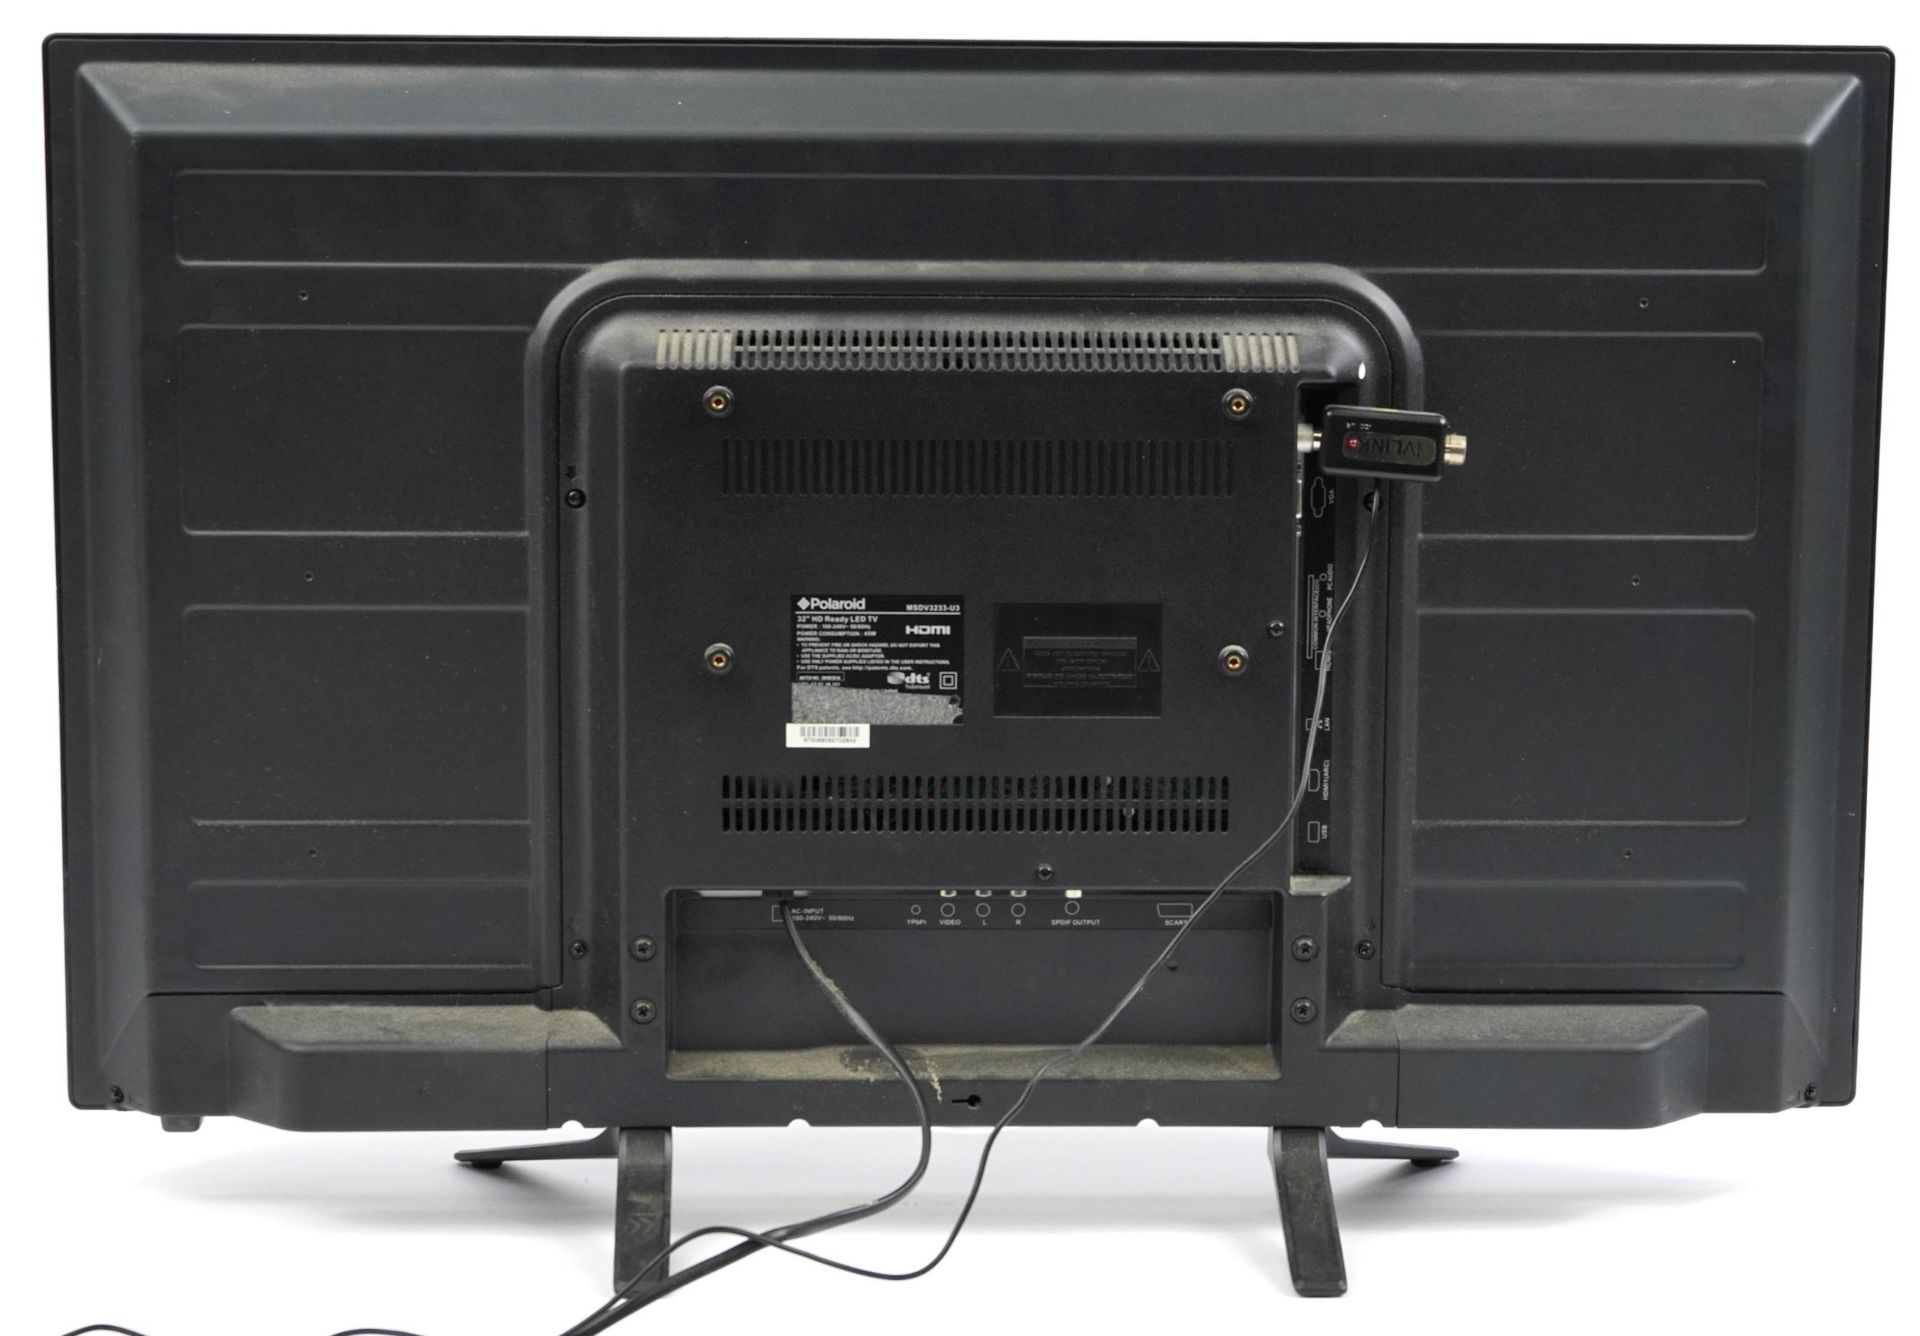 Polaroid 32 inch LED television model MSDV3233-U3 - Image 2 of 3